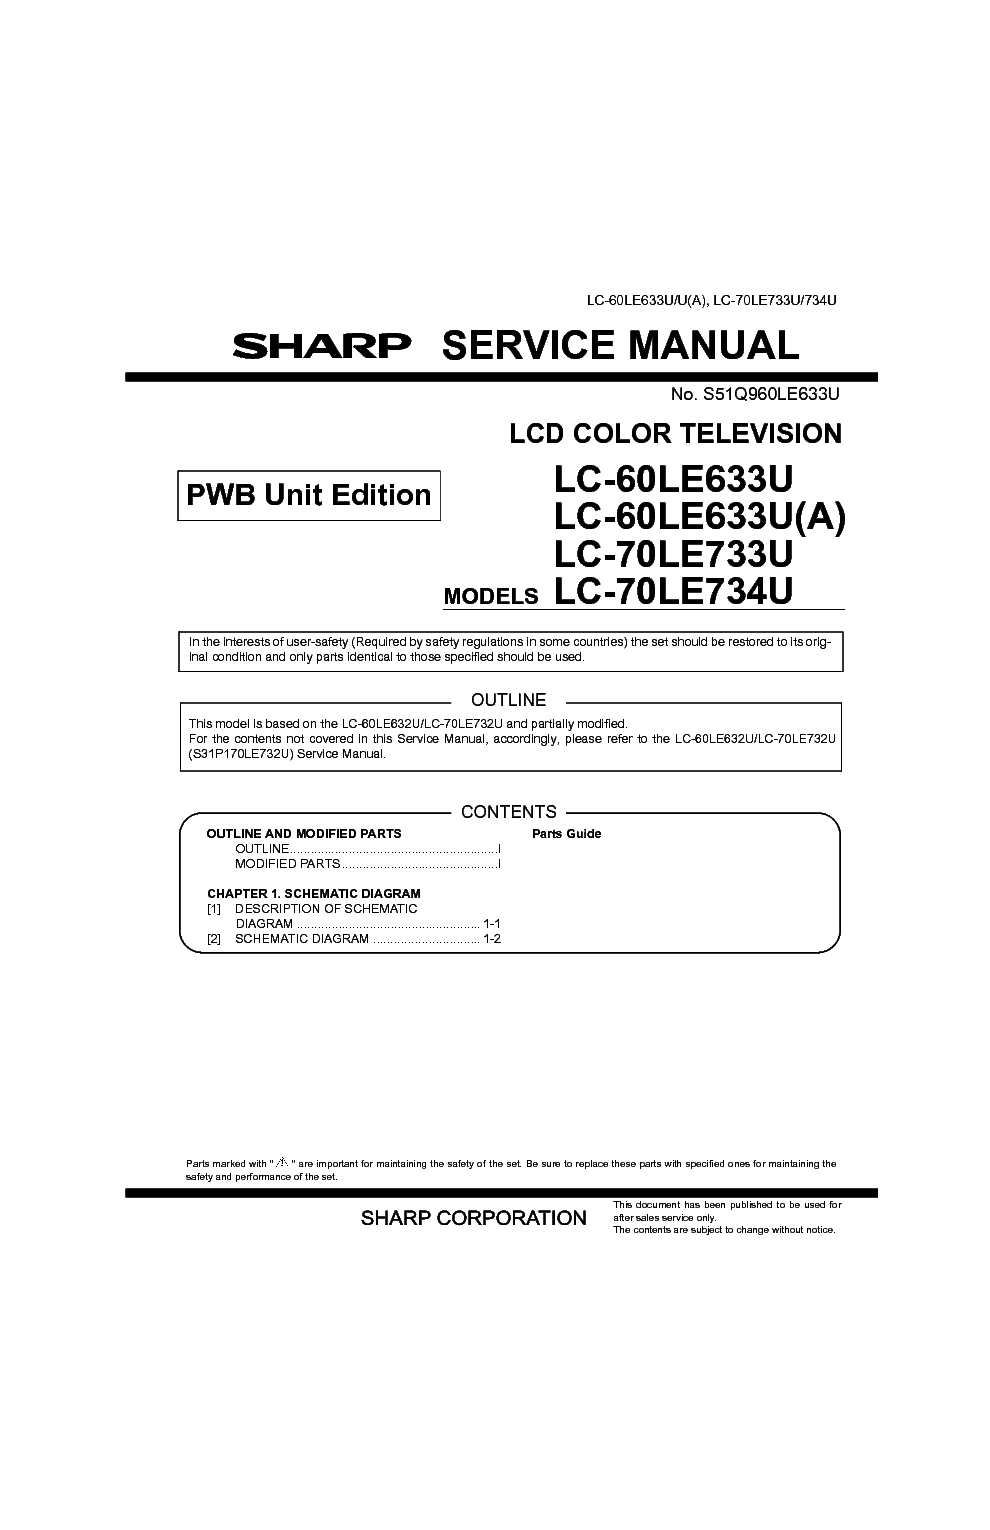 sharp tv service manual free download